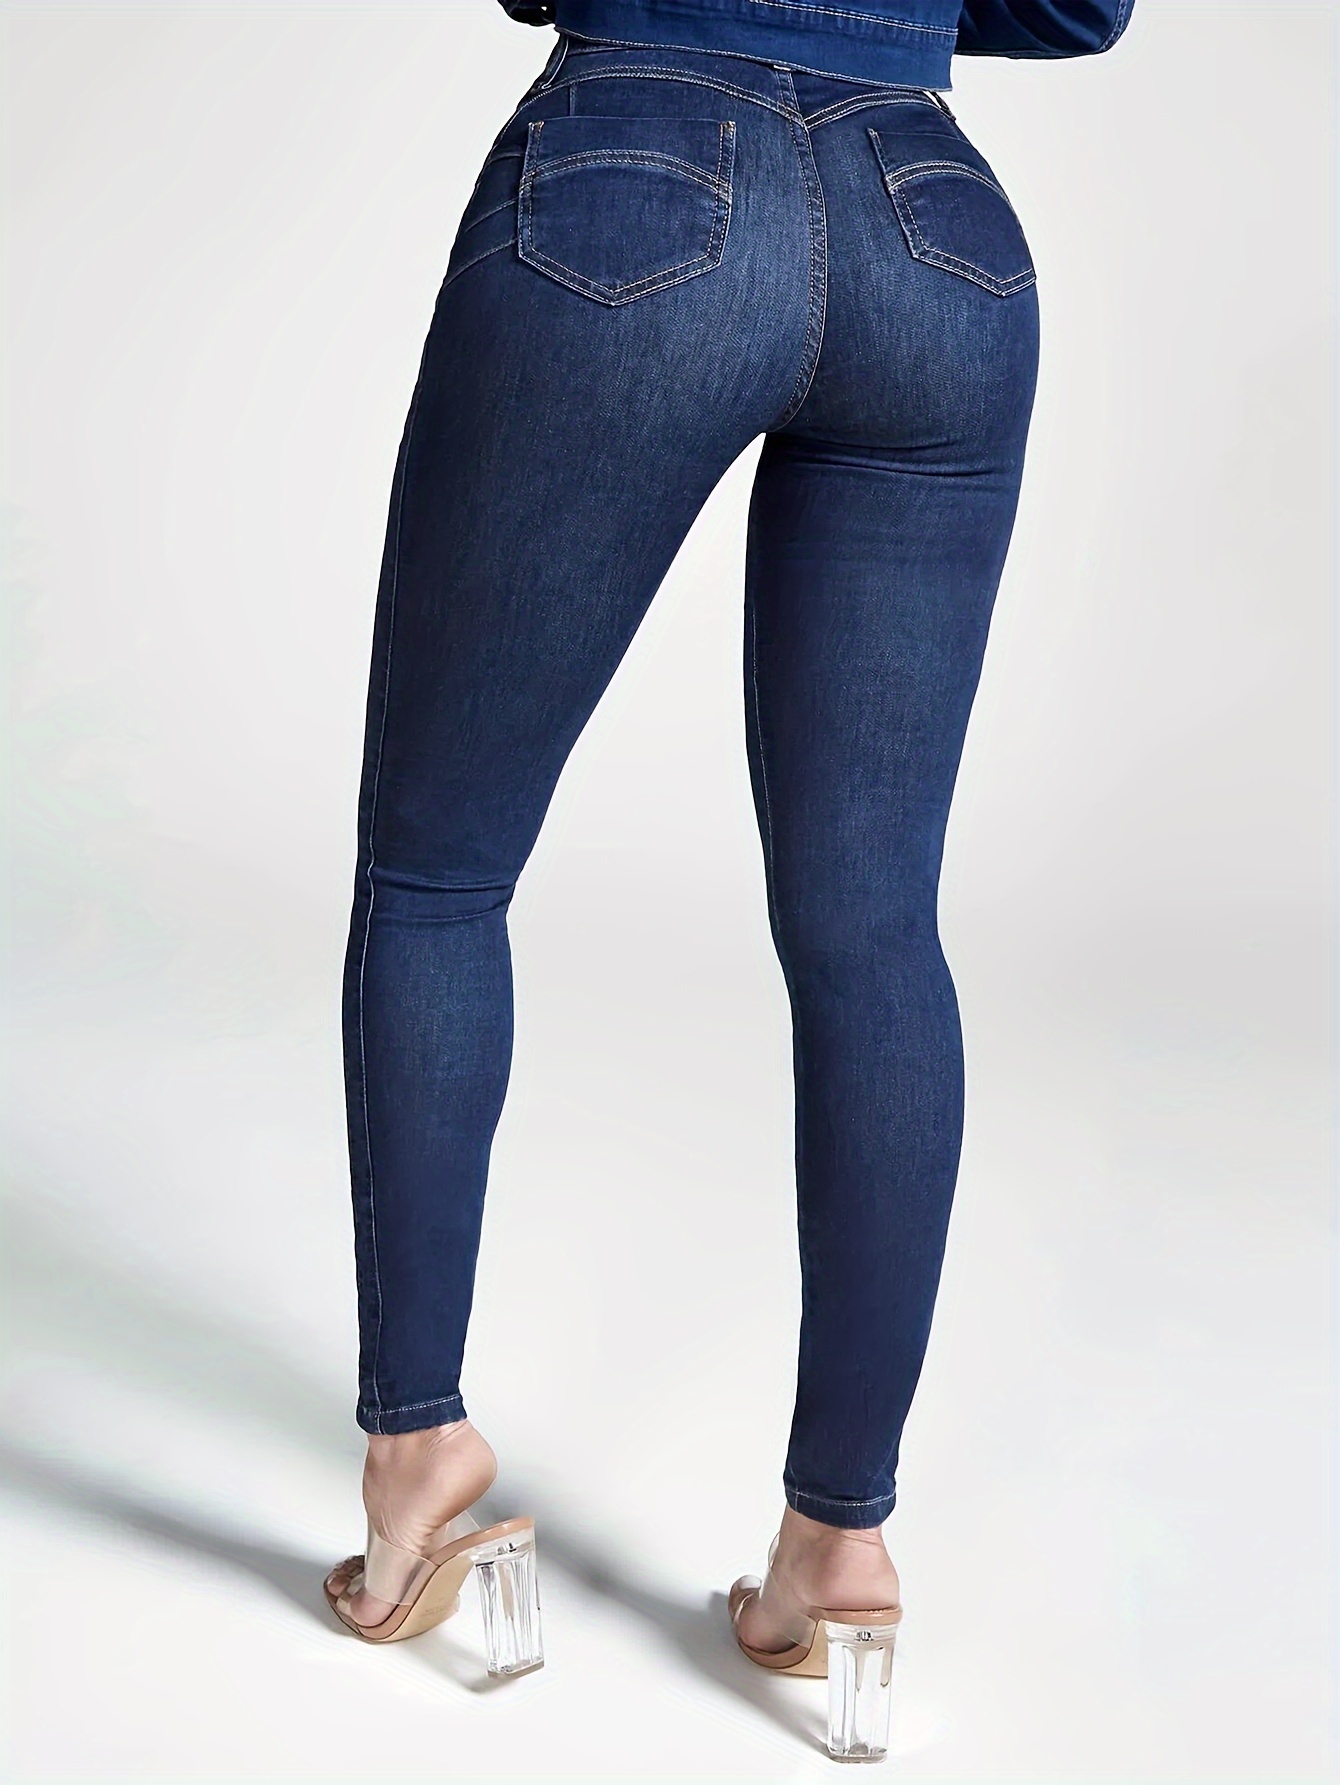 YYDGH Women's High Waist Butt-Lifting Skinny Jeans Leggings Pants Solid  Color Slim Denim Pencil Pants Dark Blue Dark Blue